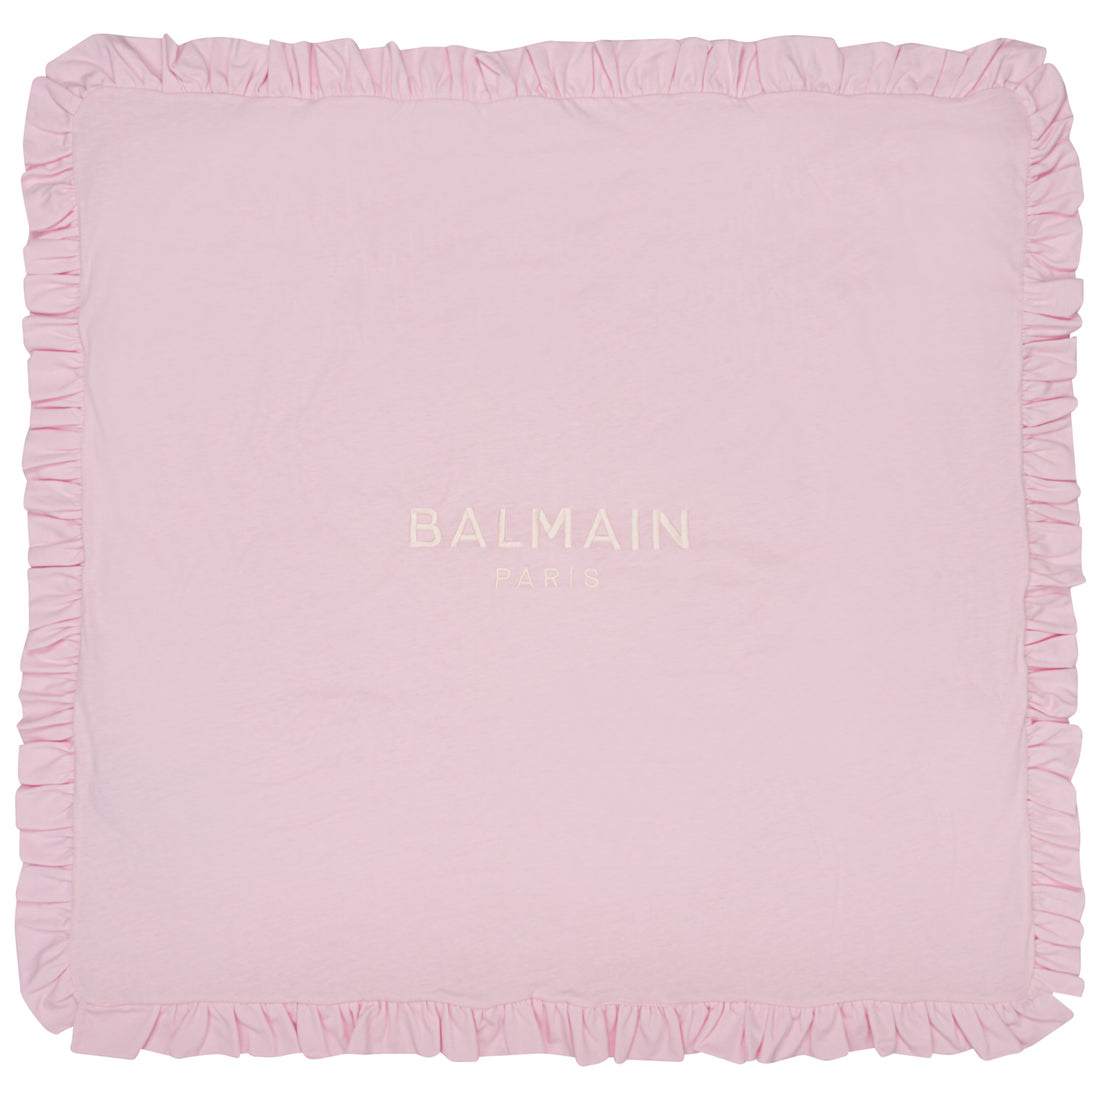 Balmain Blanket